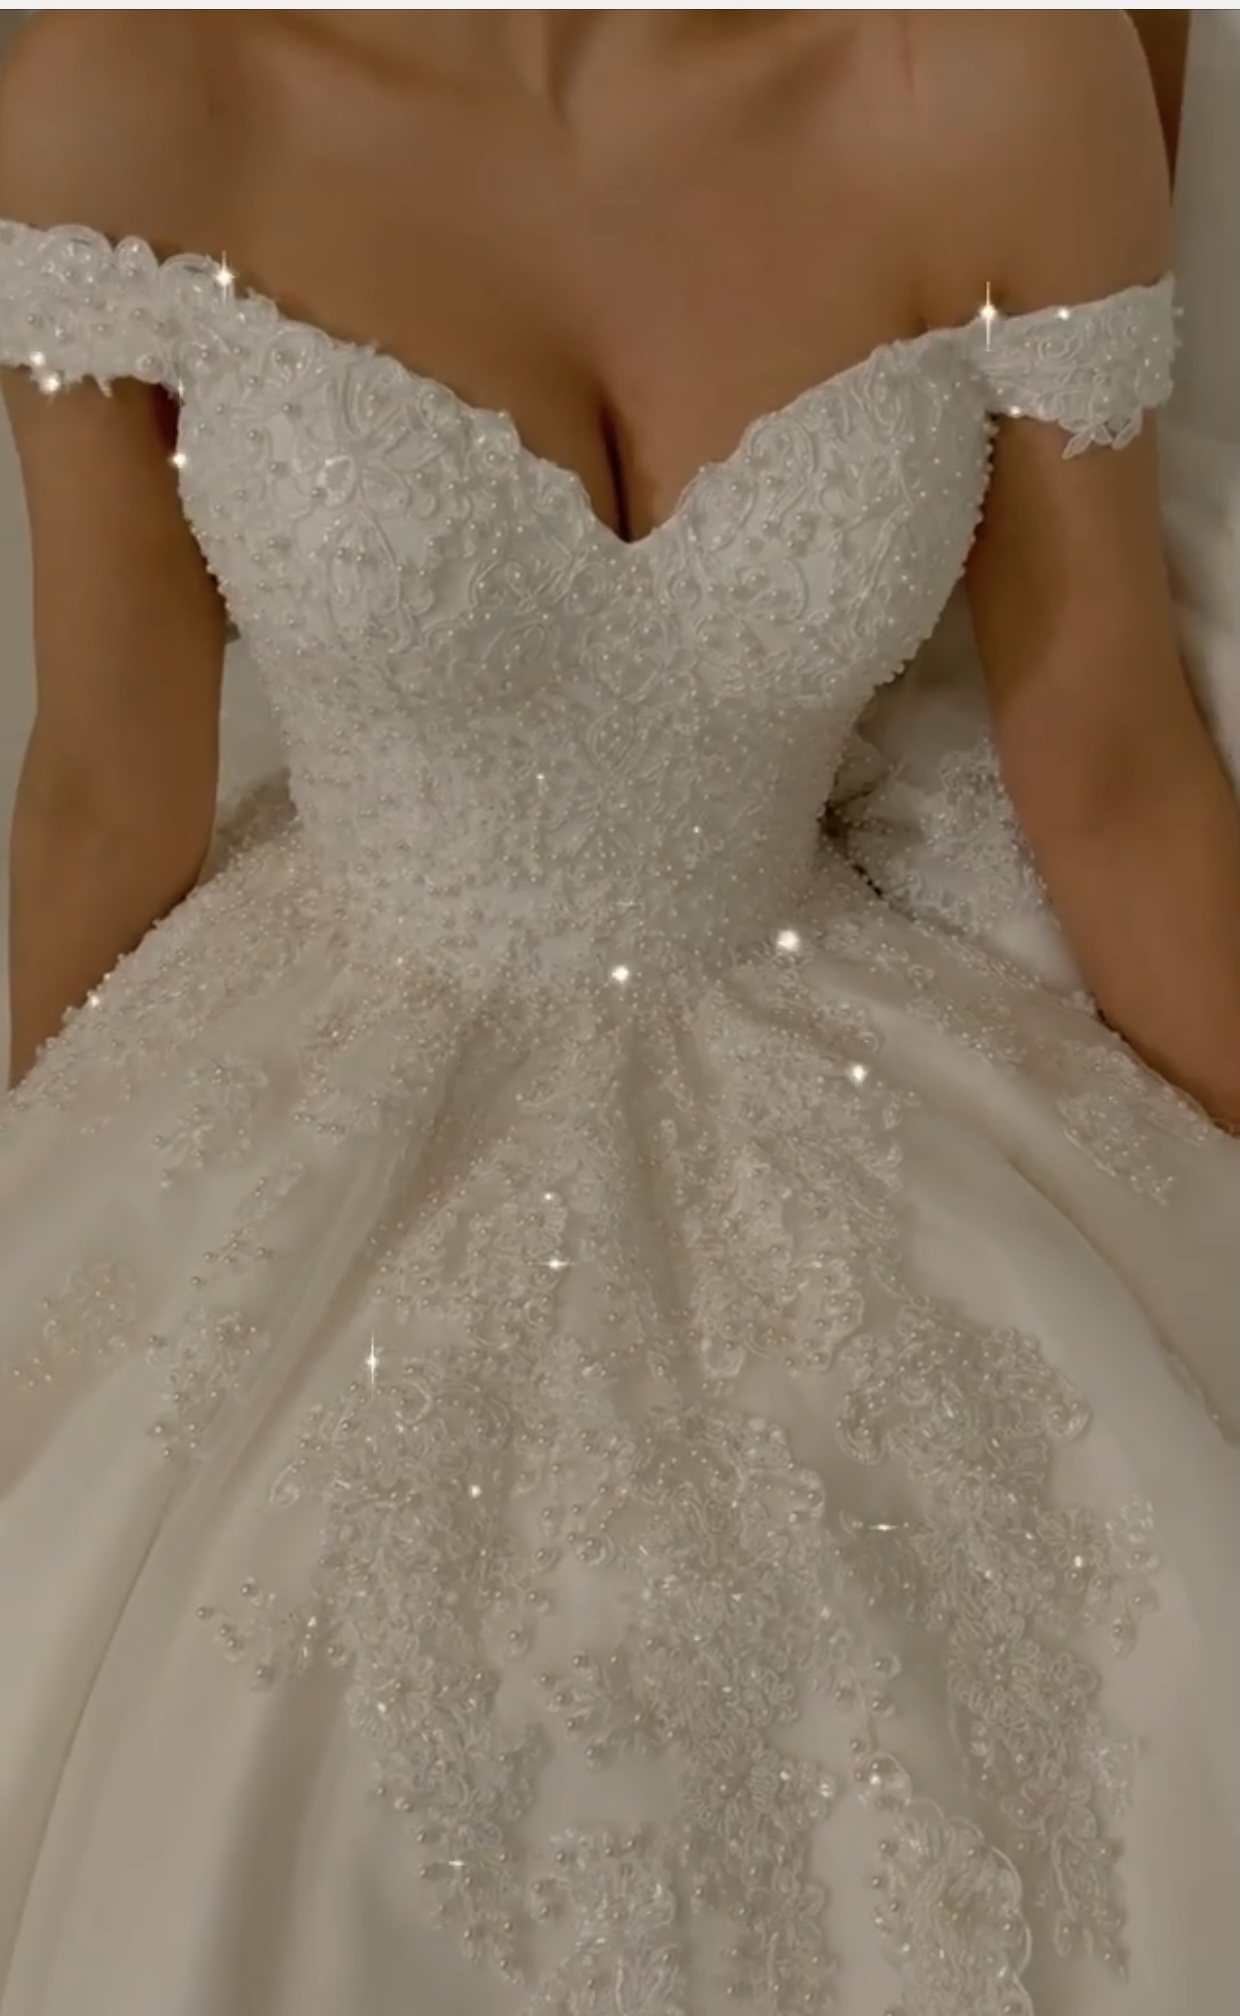 The Most Sparkly Wedding Dress Ever Slaylebrity 2140